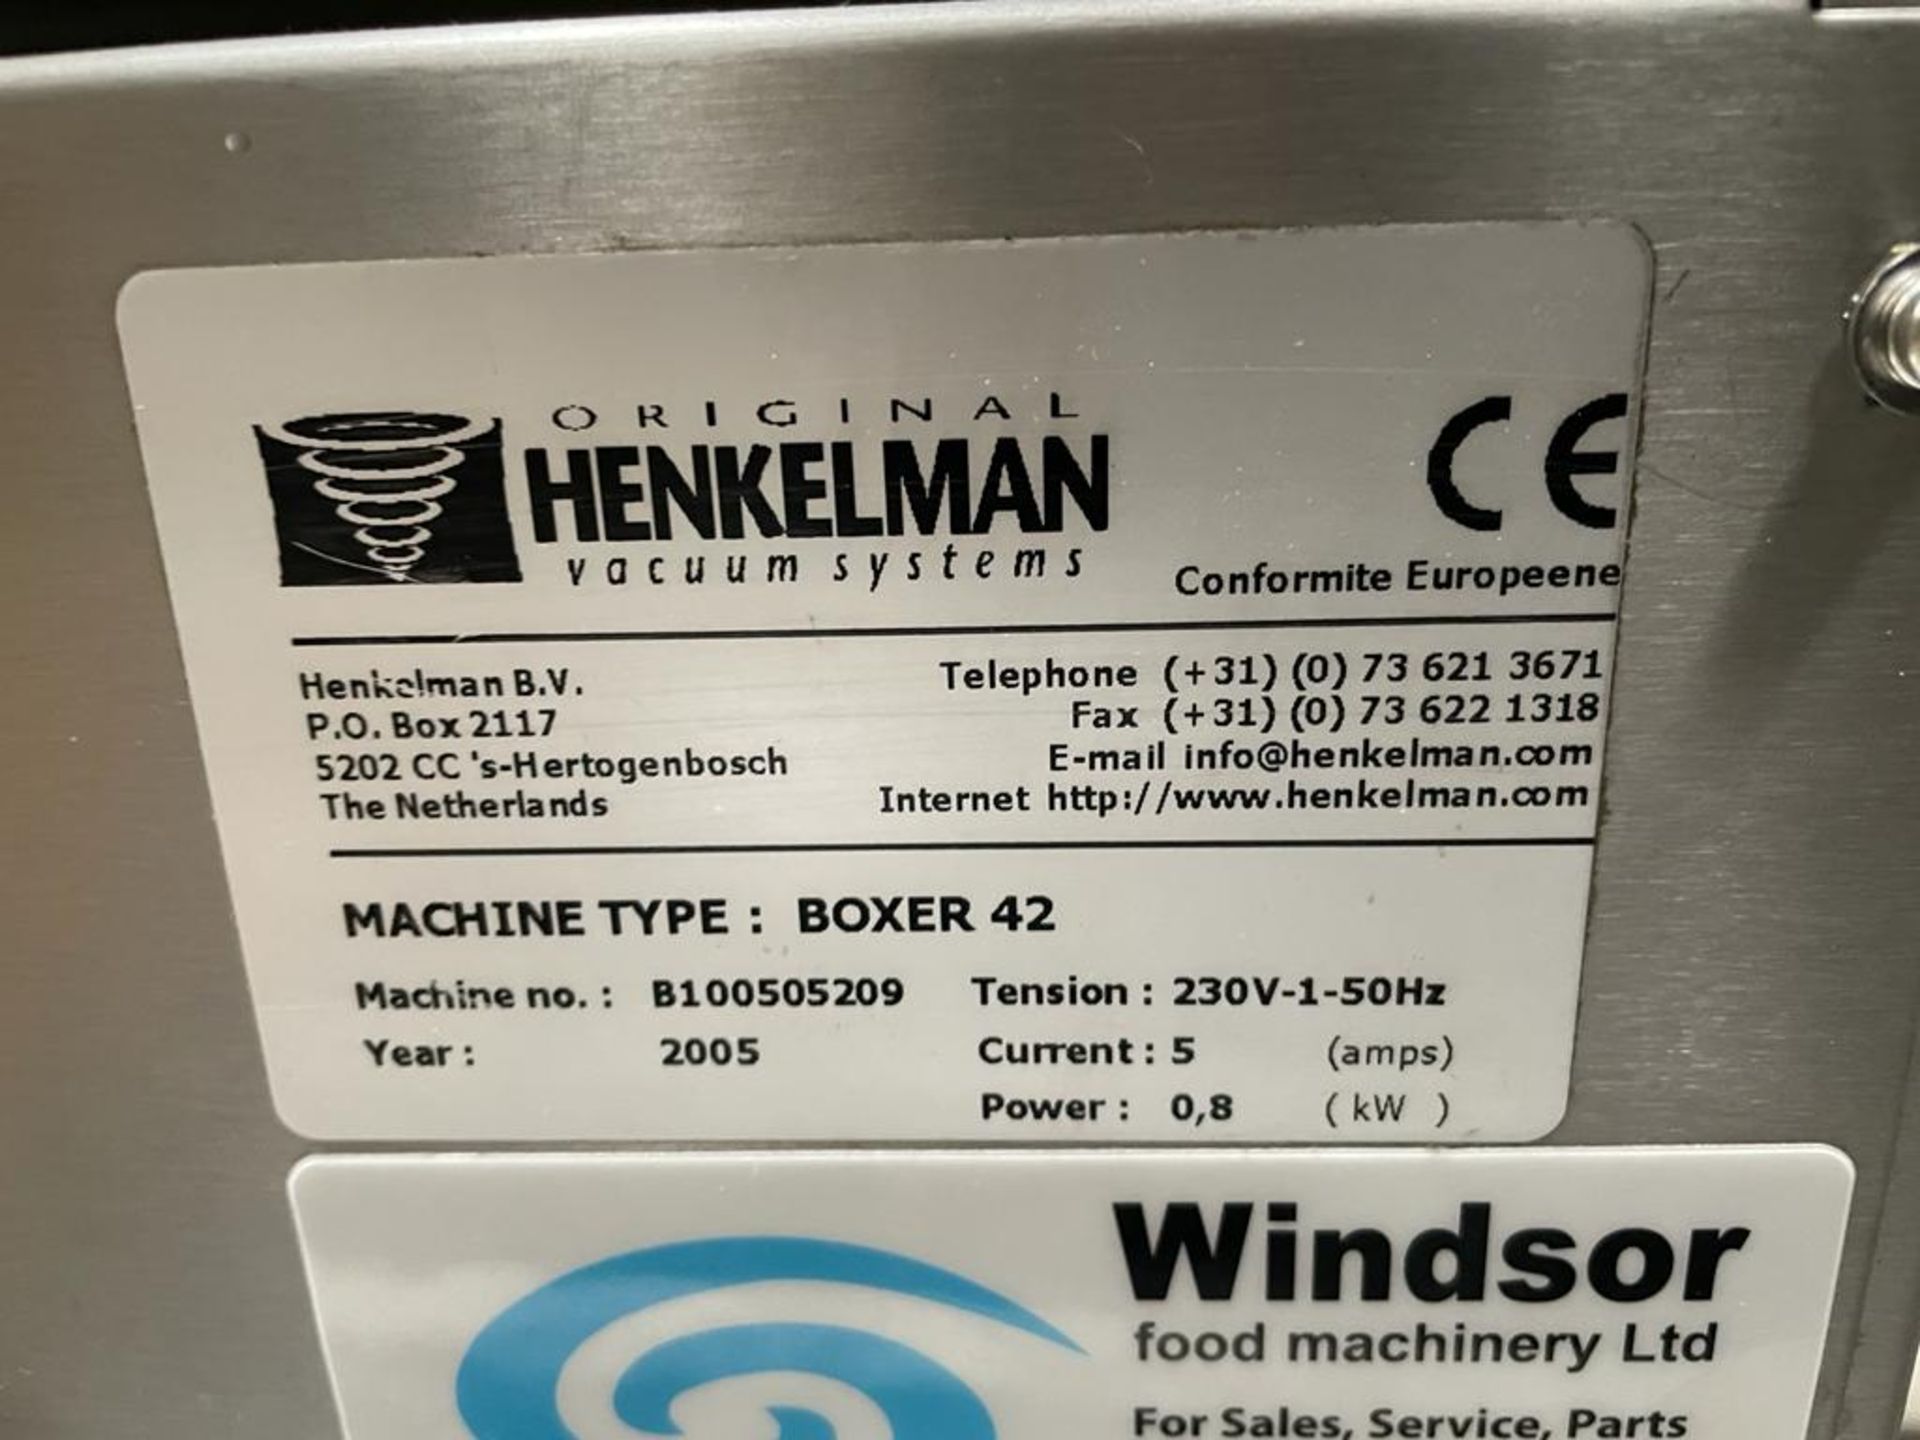 Henkelman Boxer 42 Chamber Vacuum Sealer (2005), Serial Number B100505209 - Image 2 of 2